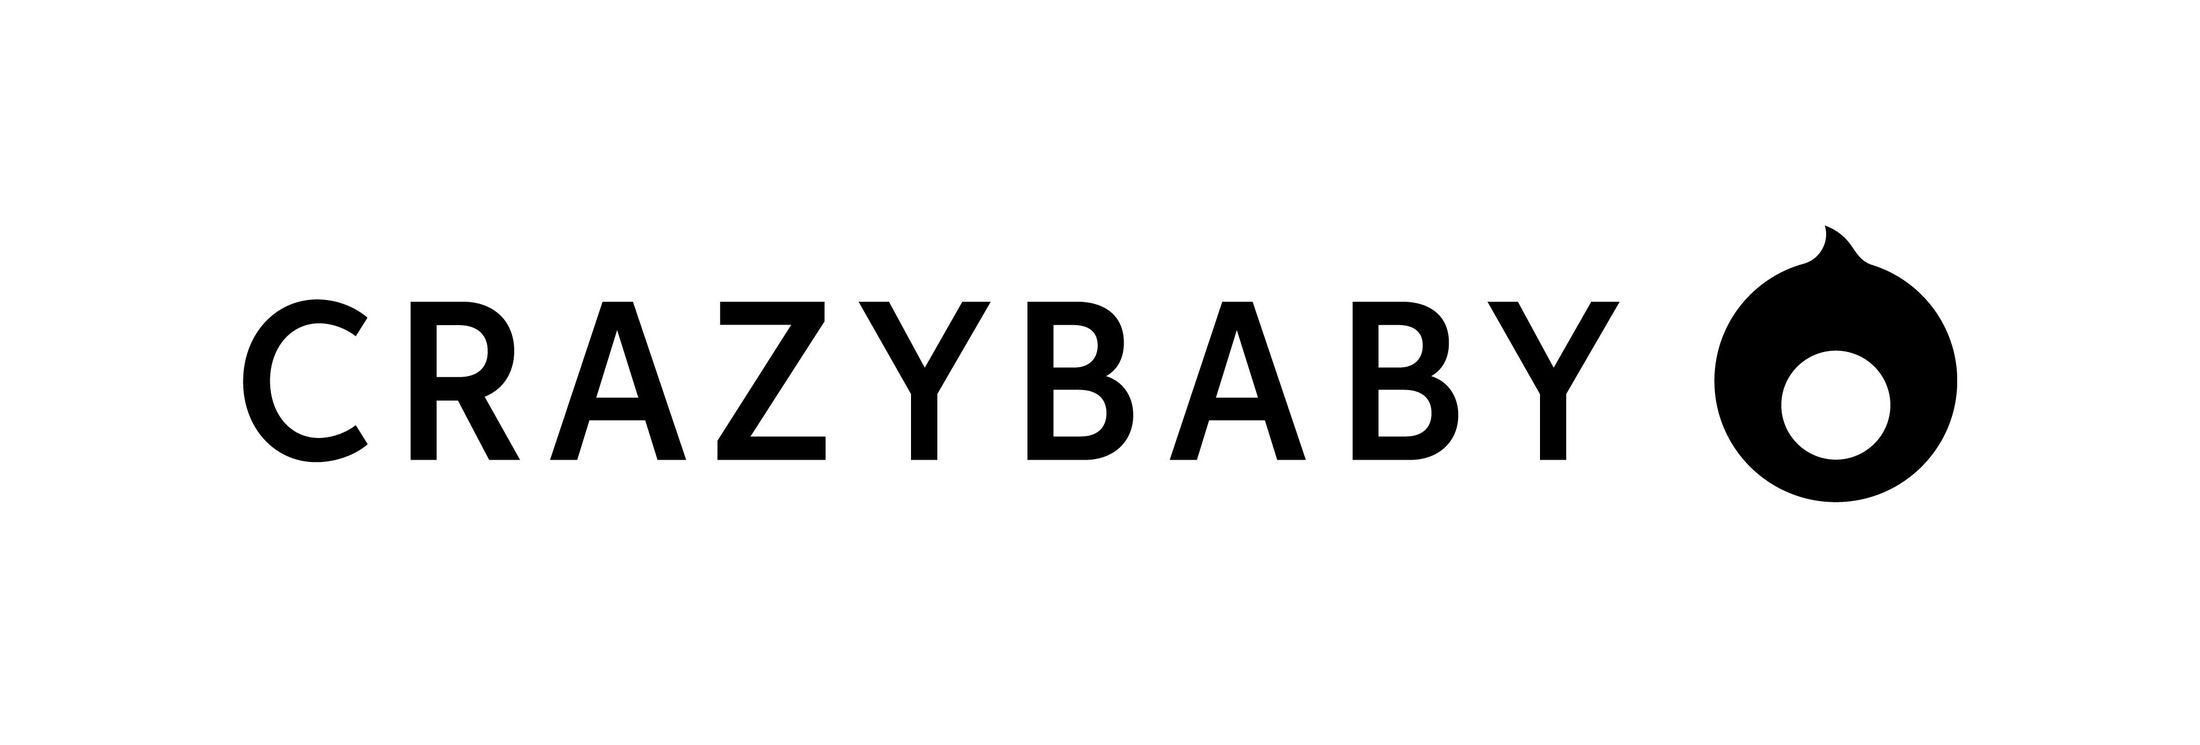 crazybaby-logo